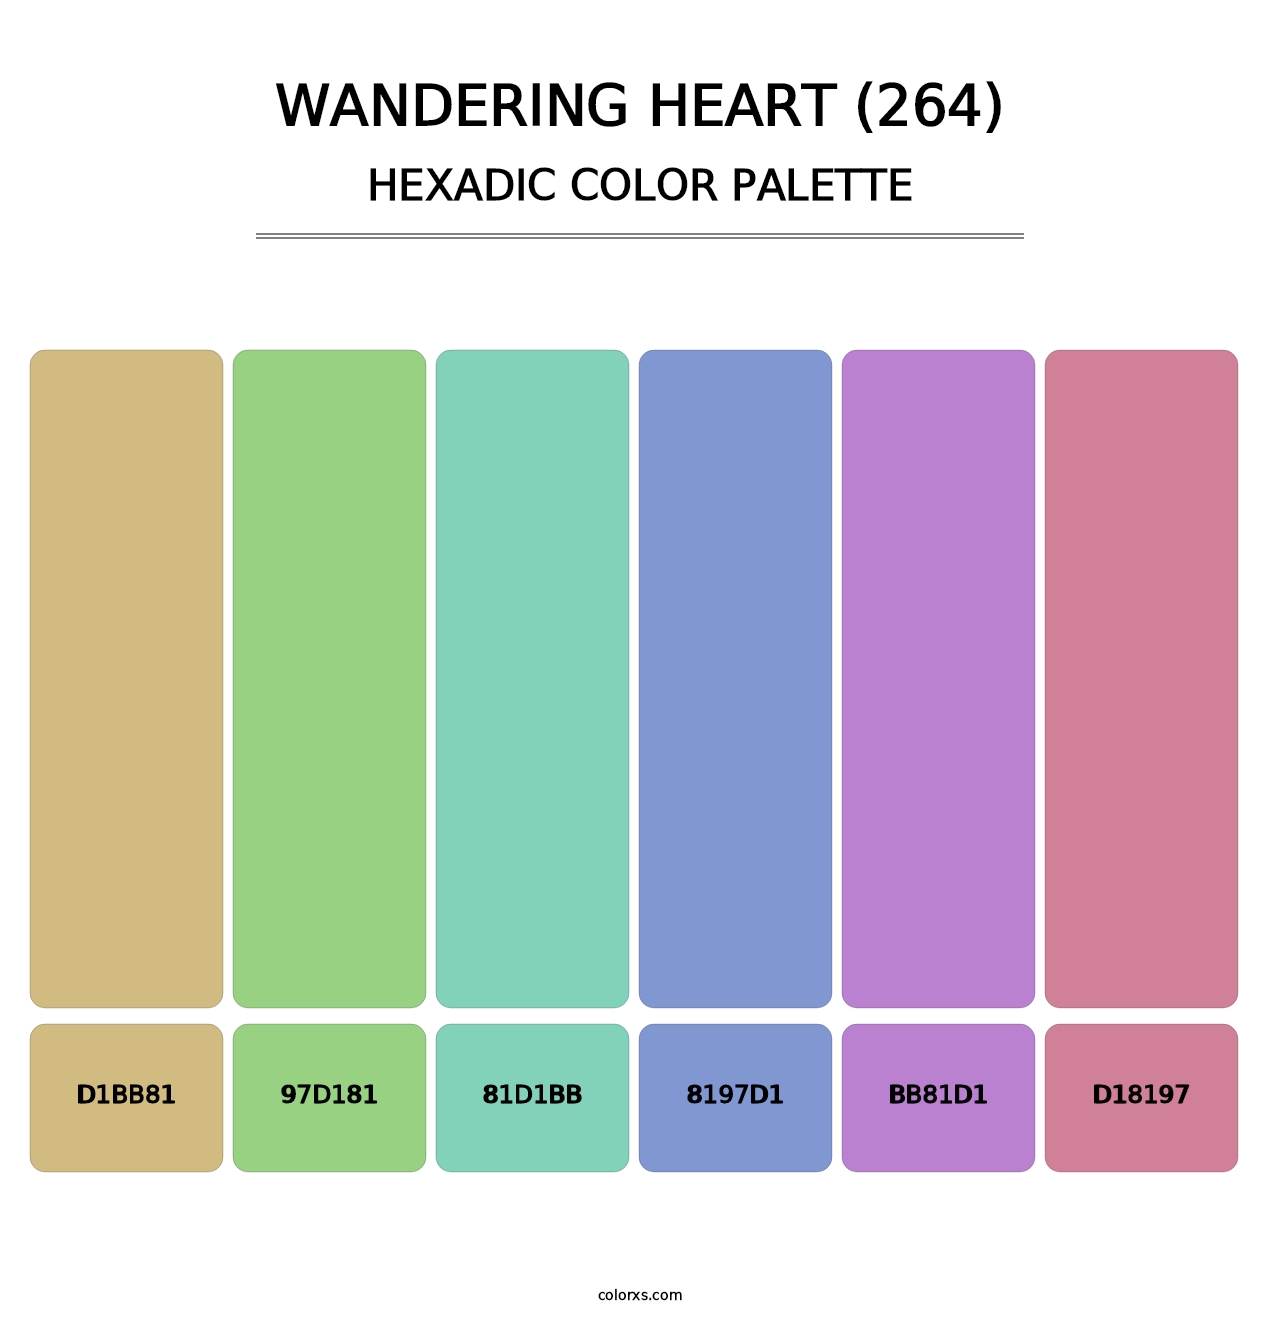 Wandering Heart (264) - Hexadic Color Palette